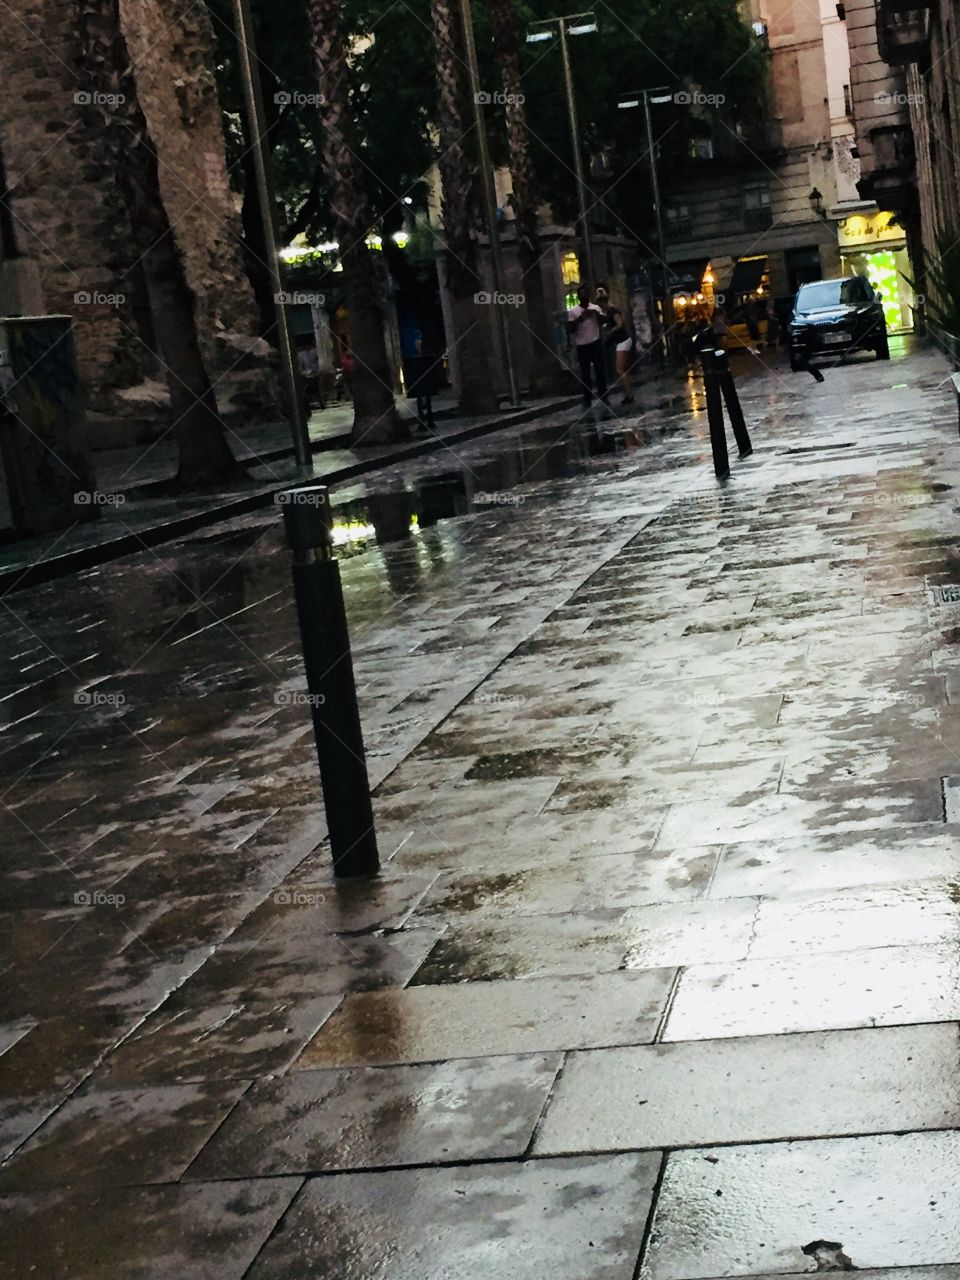 Barcelona Raval Street after Raining 